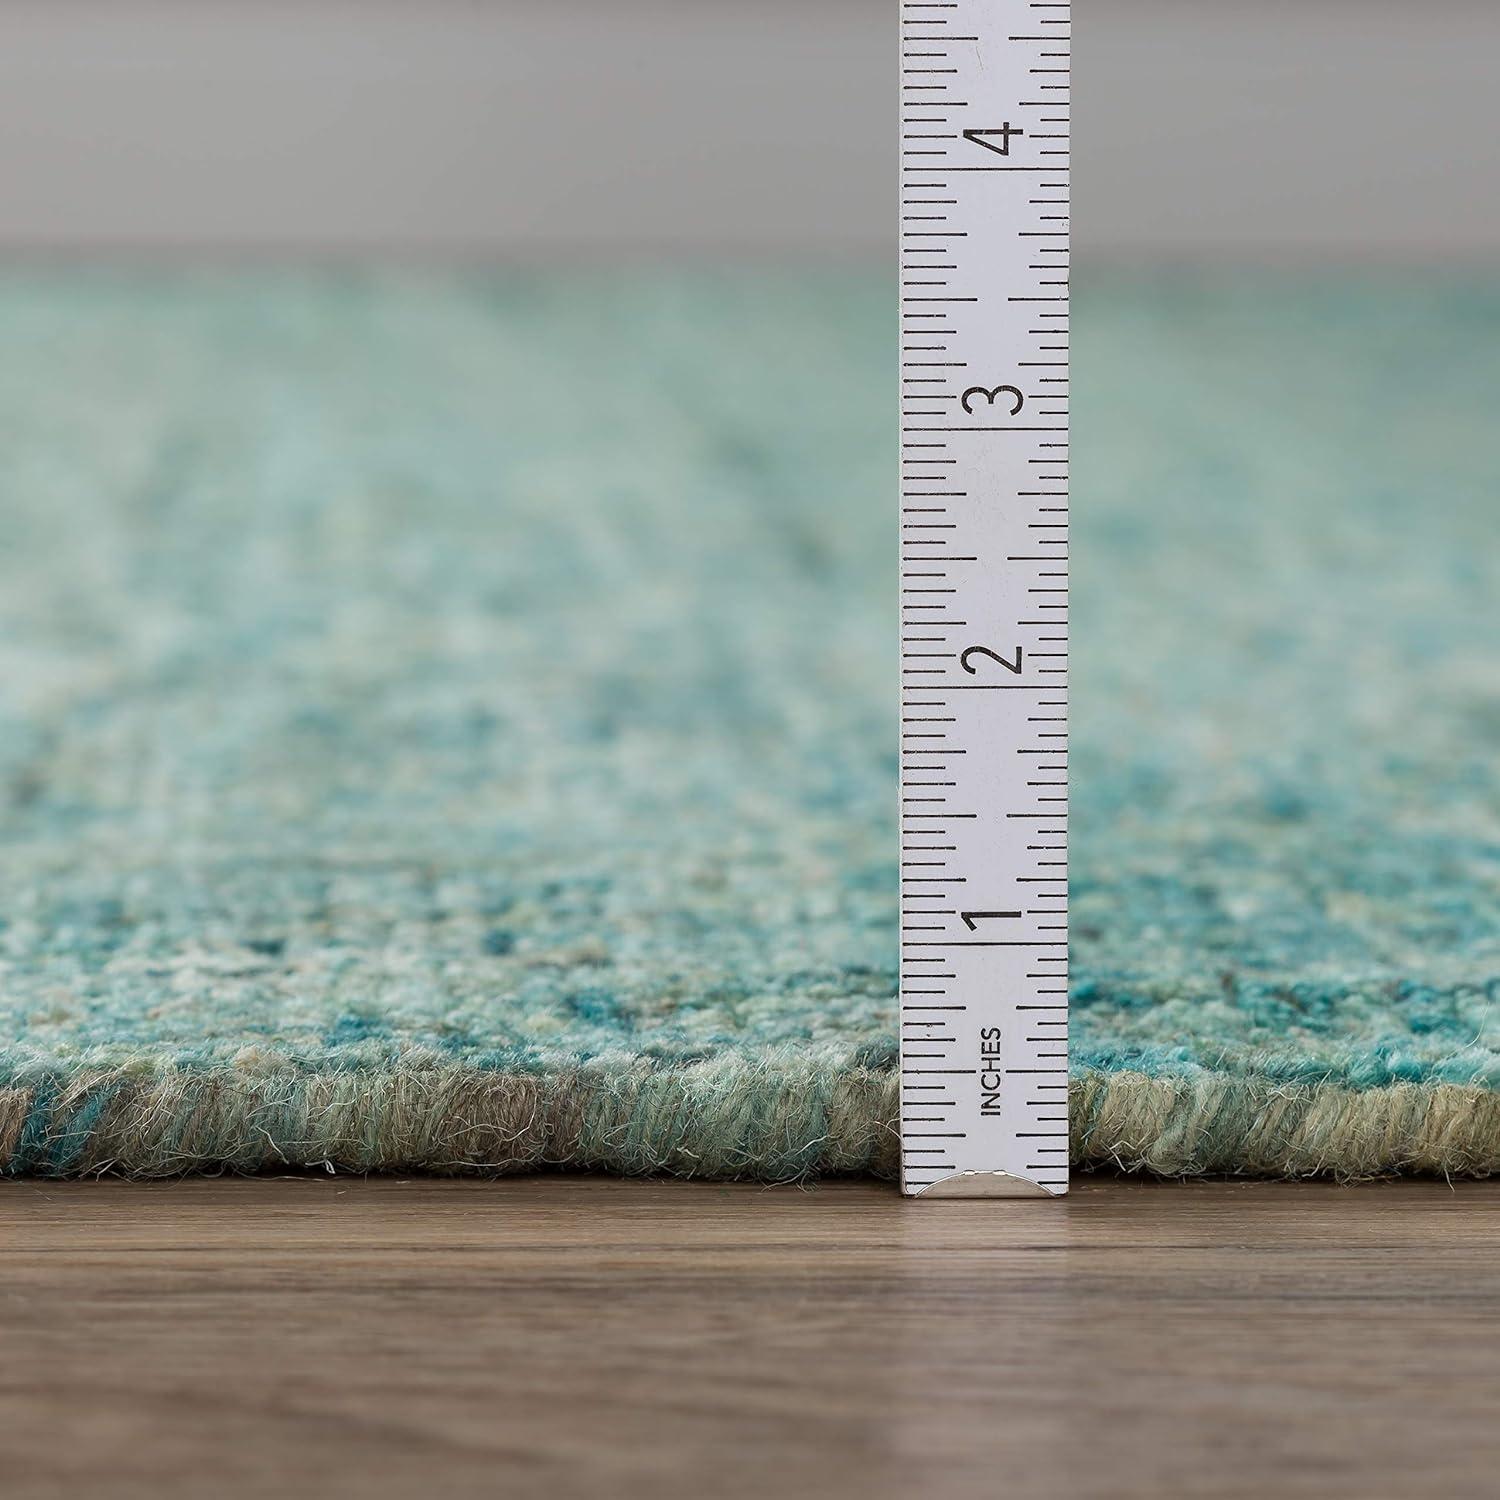 Handmade Turquoise & Teal Wool Rectangular Rug 3'6" x 5'6"